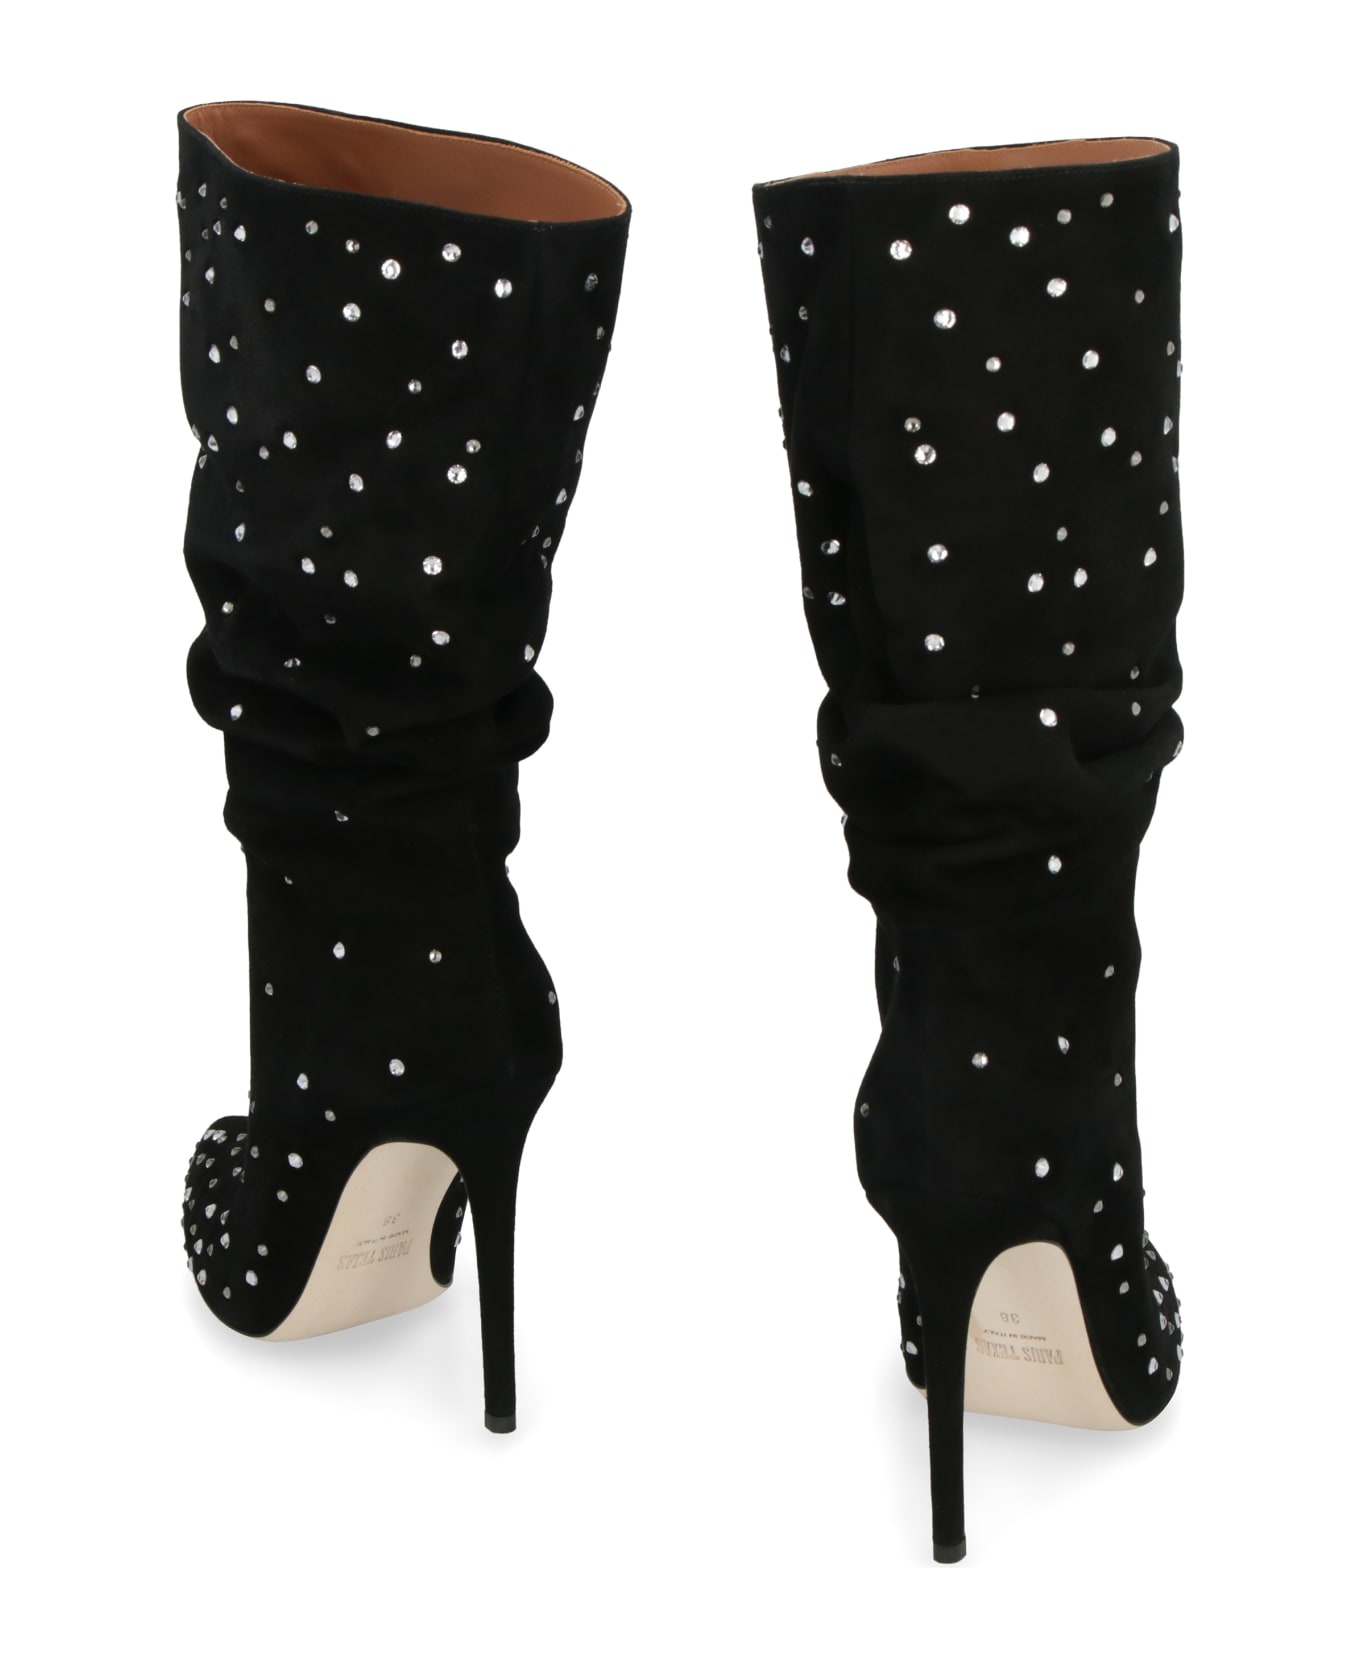 Paris Texas Holly Suede Knee High Boots - Black Diamond